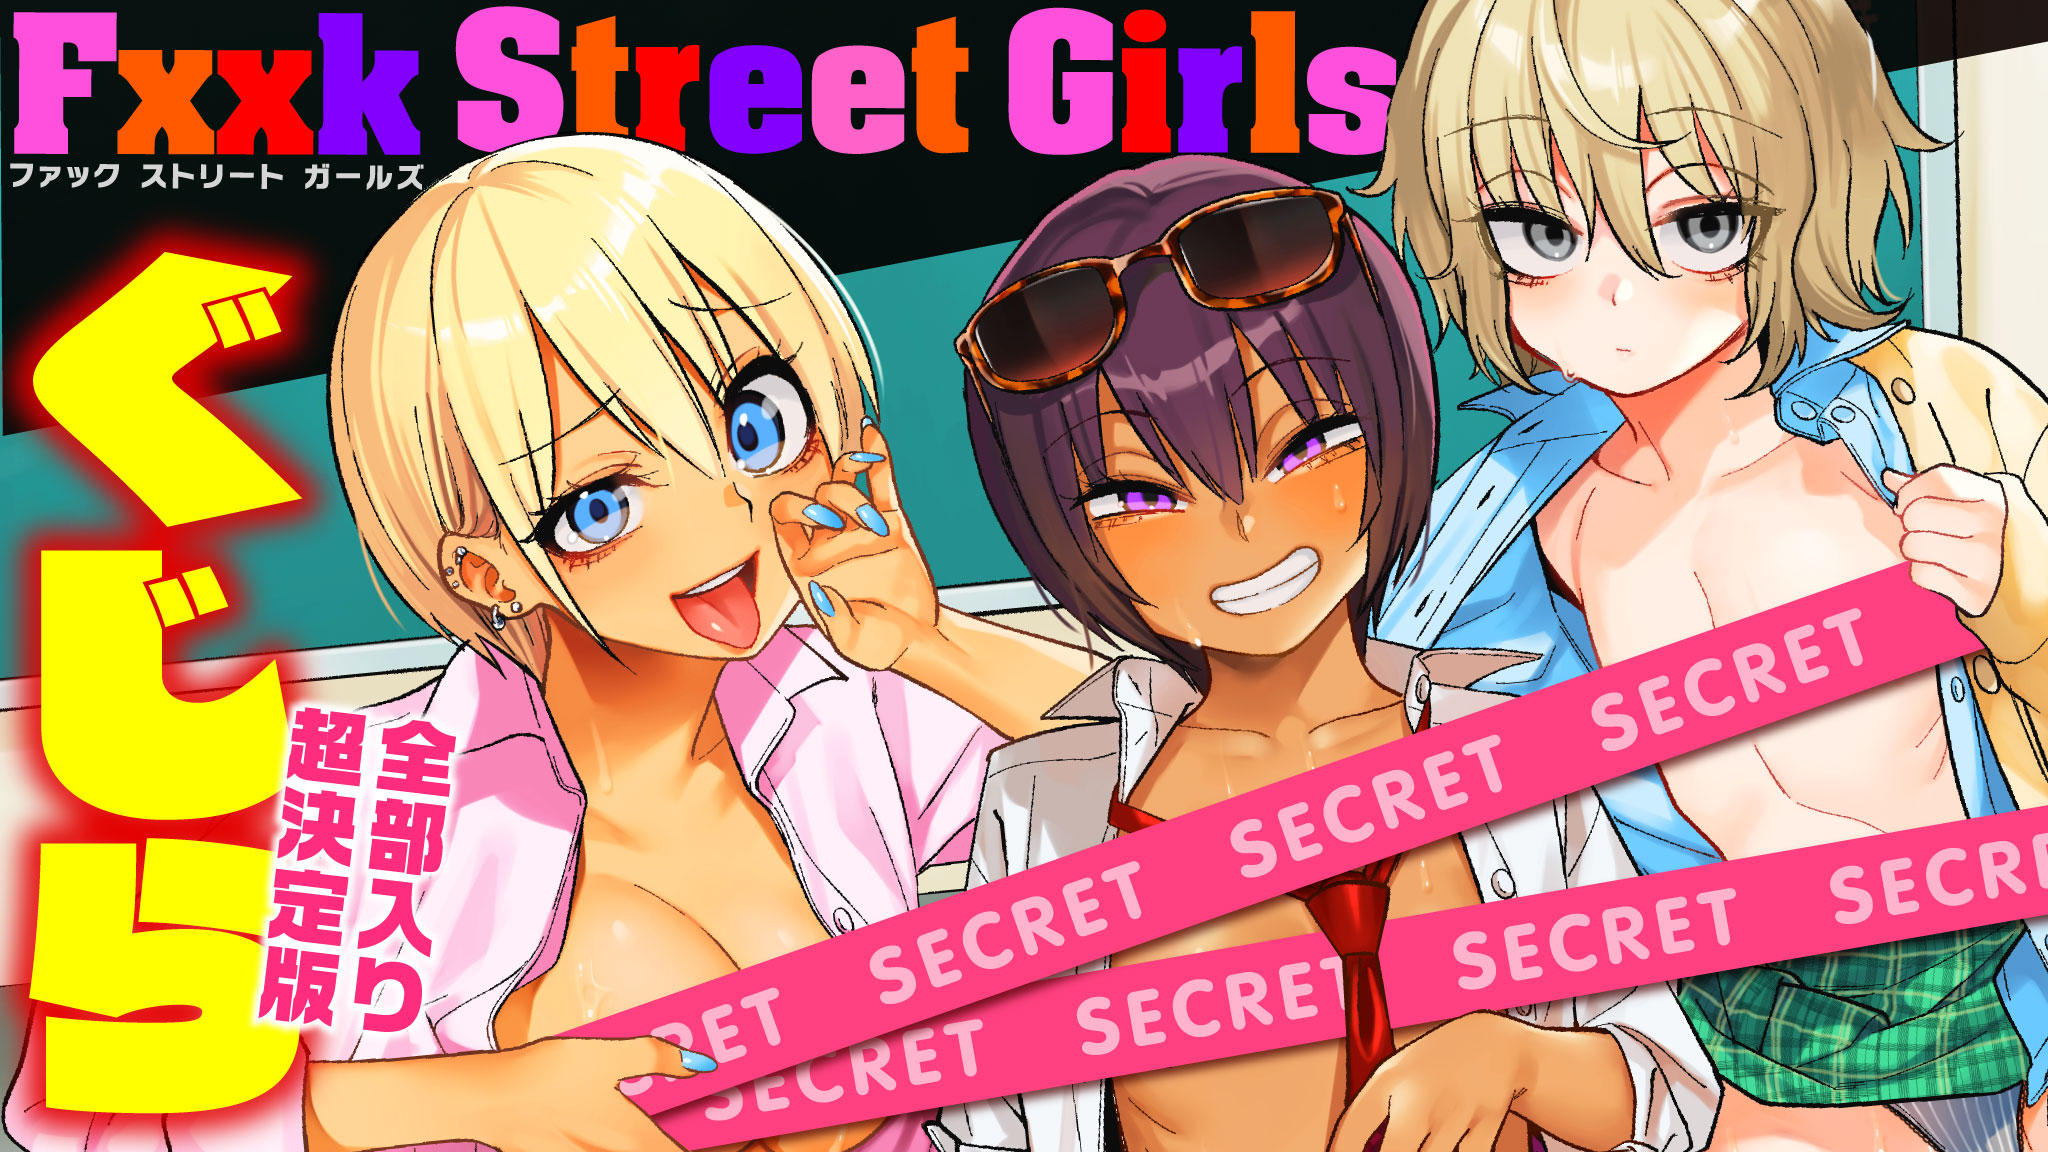 Fxxk street girls